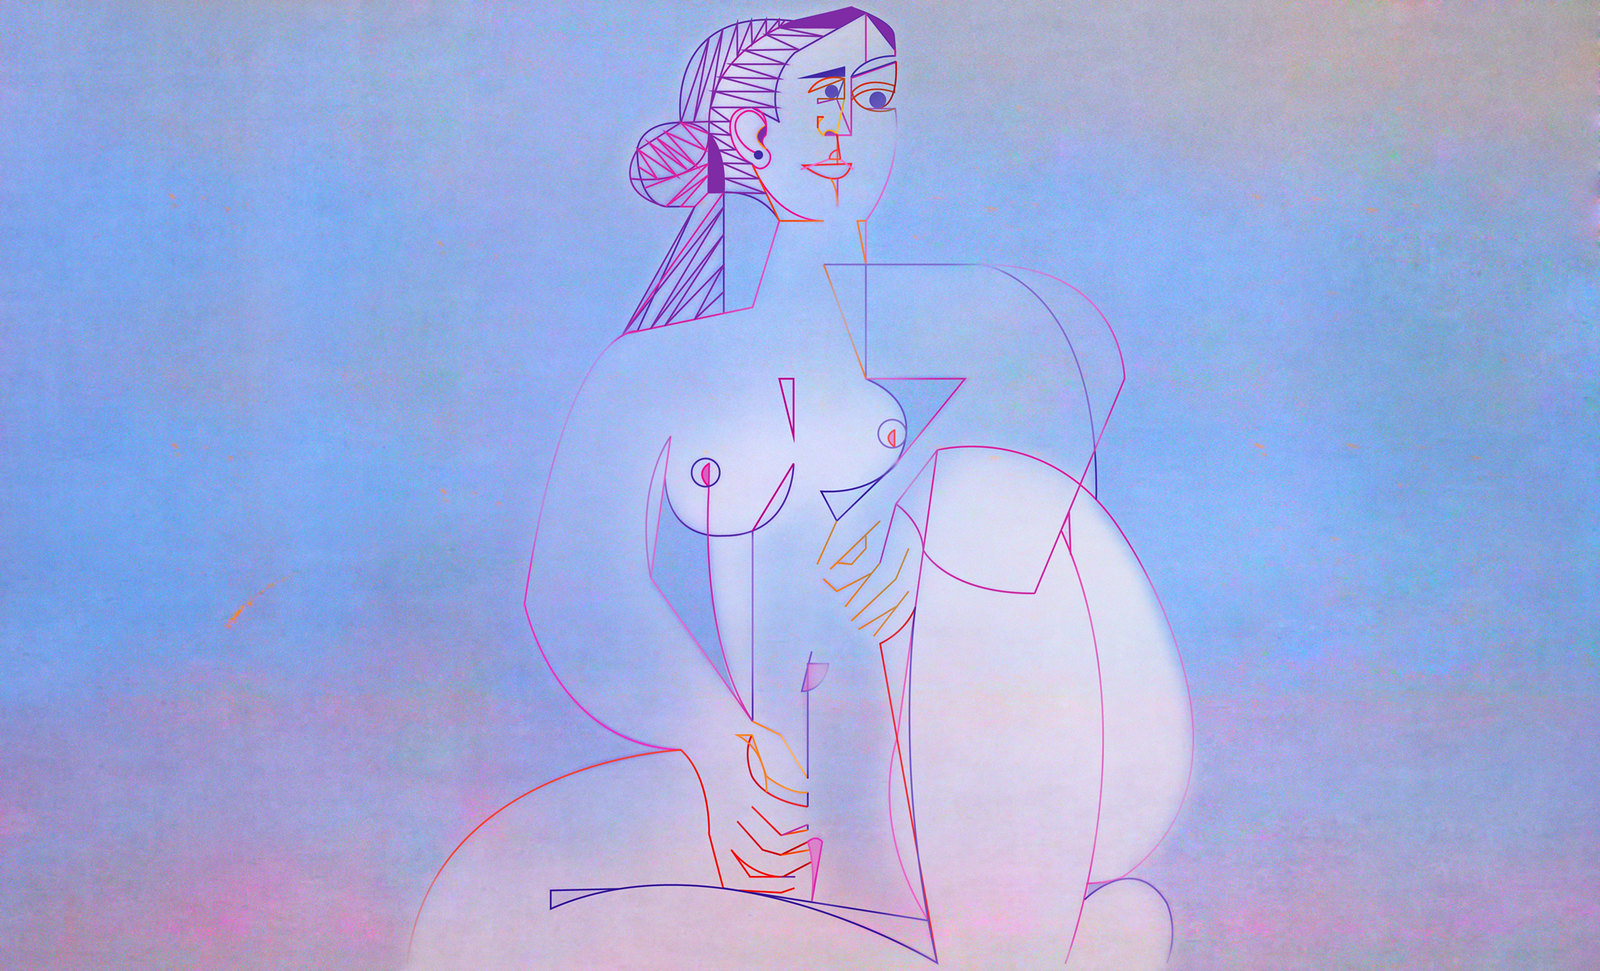 Mujer Sentada, geometrización de Pablo Picasso (1953), abstracción de Roberto Real de León (2013).